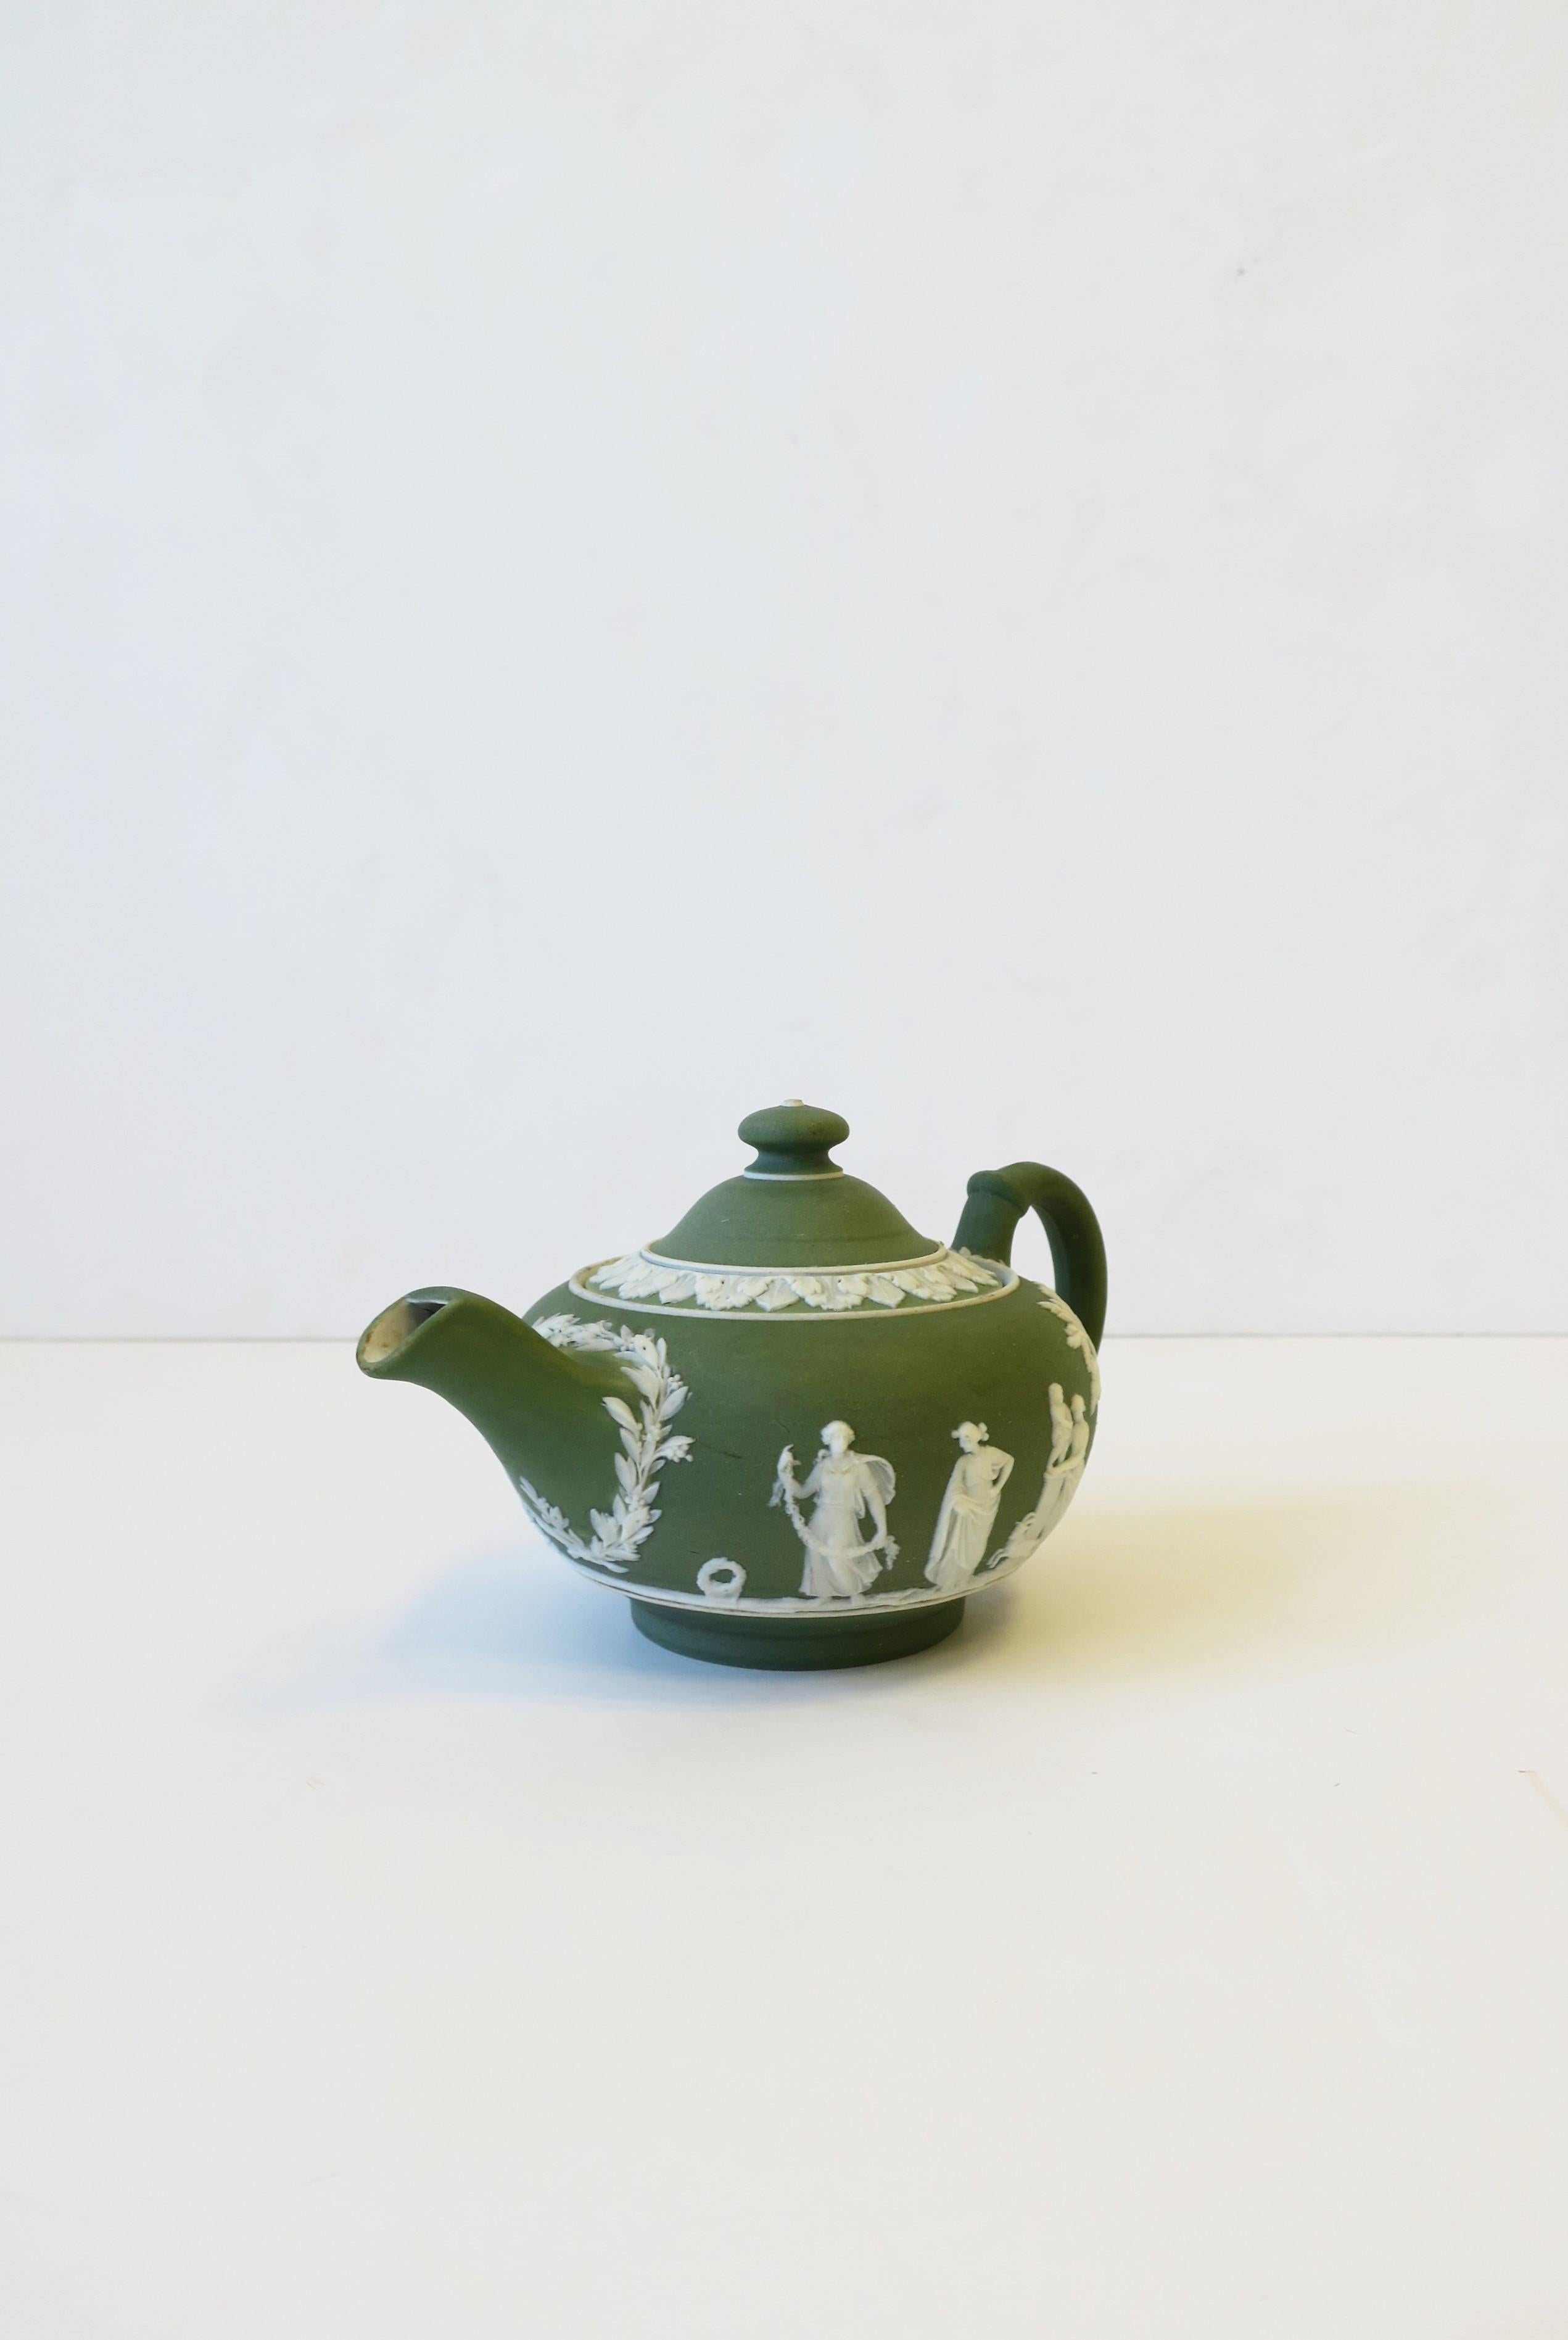 Ceramic English Wedgwood Jasperware Matte Green and White Stoneware Tea or Coffee Pot